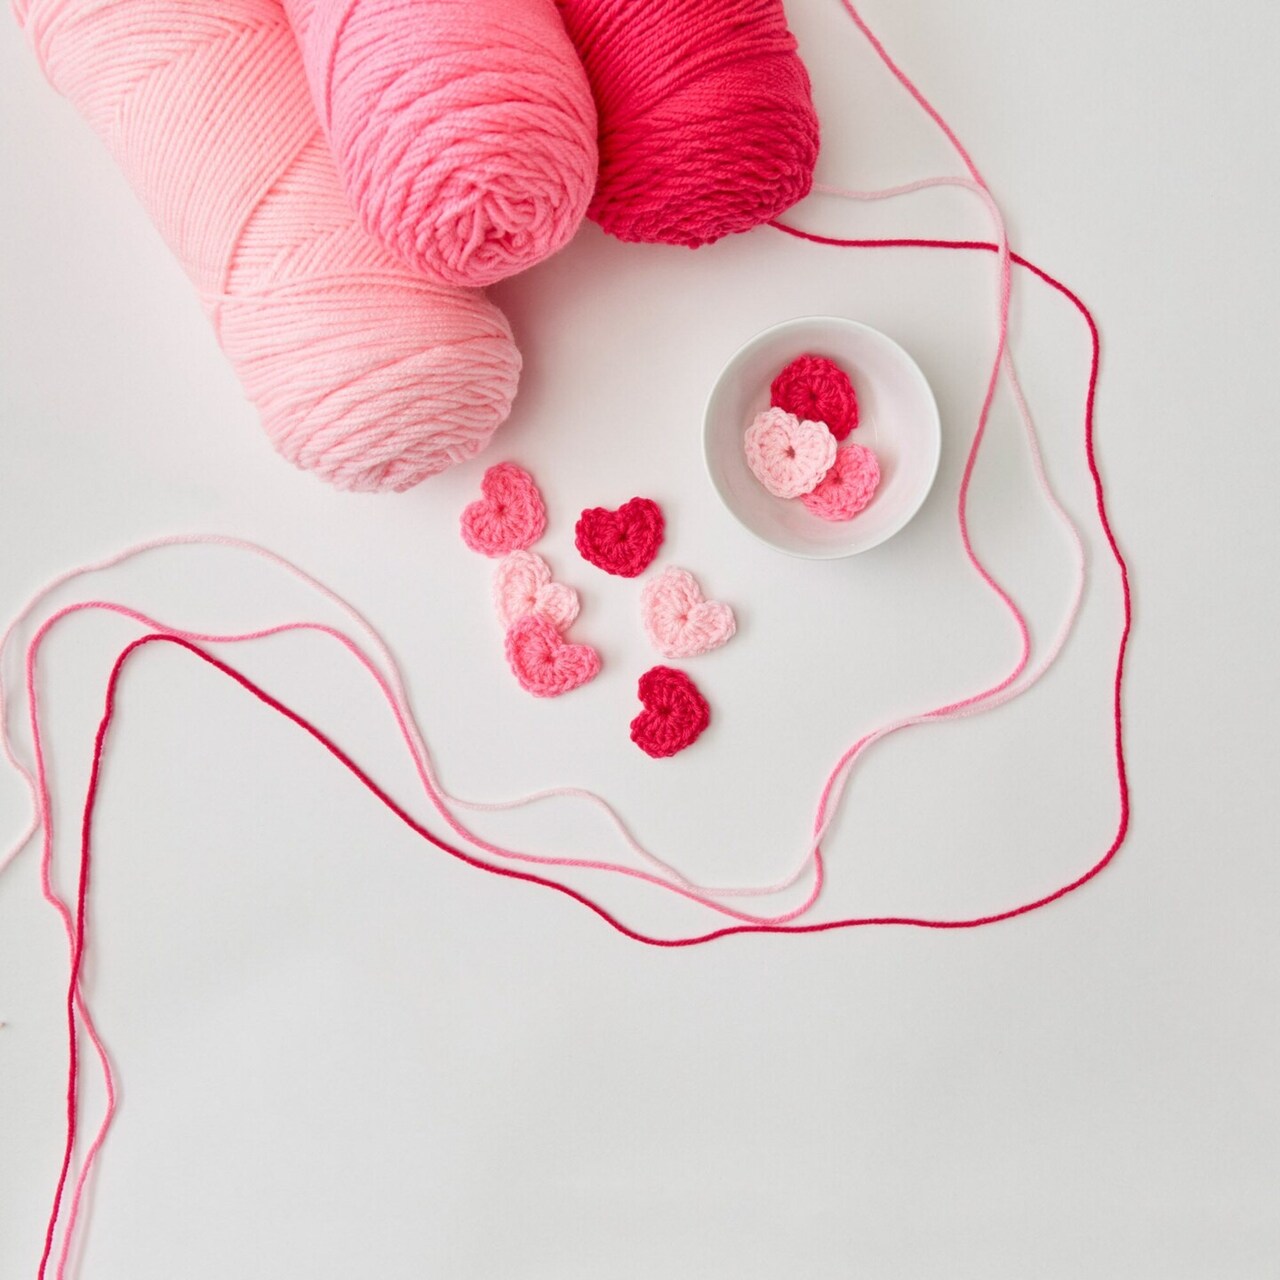 Simple Crochet Hearts with Edie Eckman - Free Online